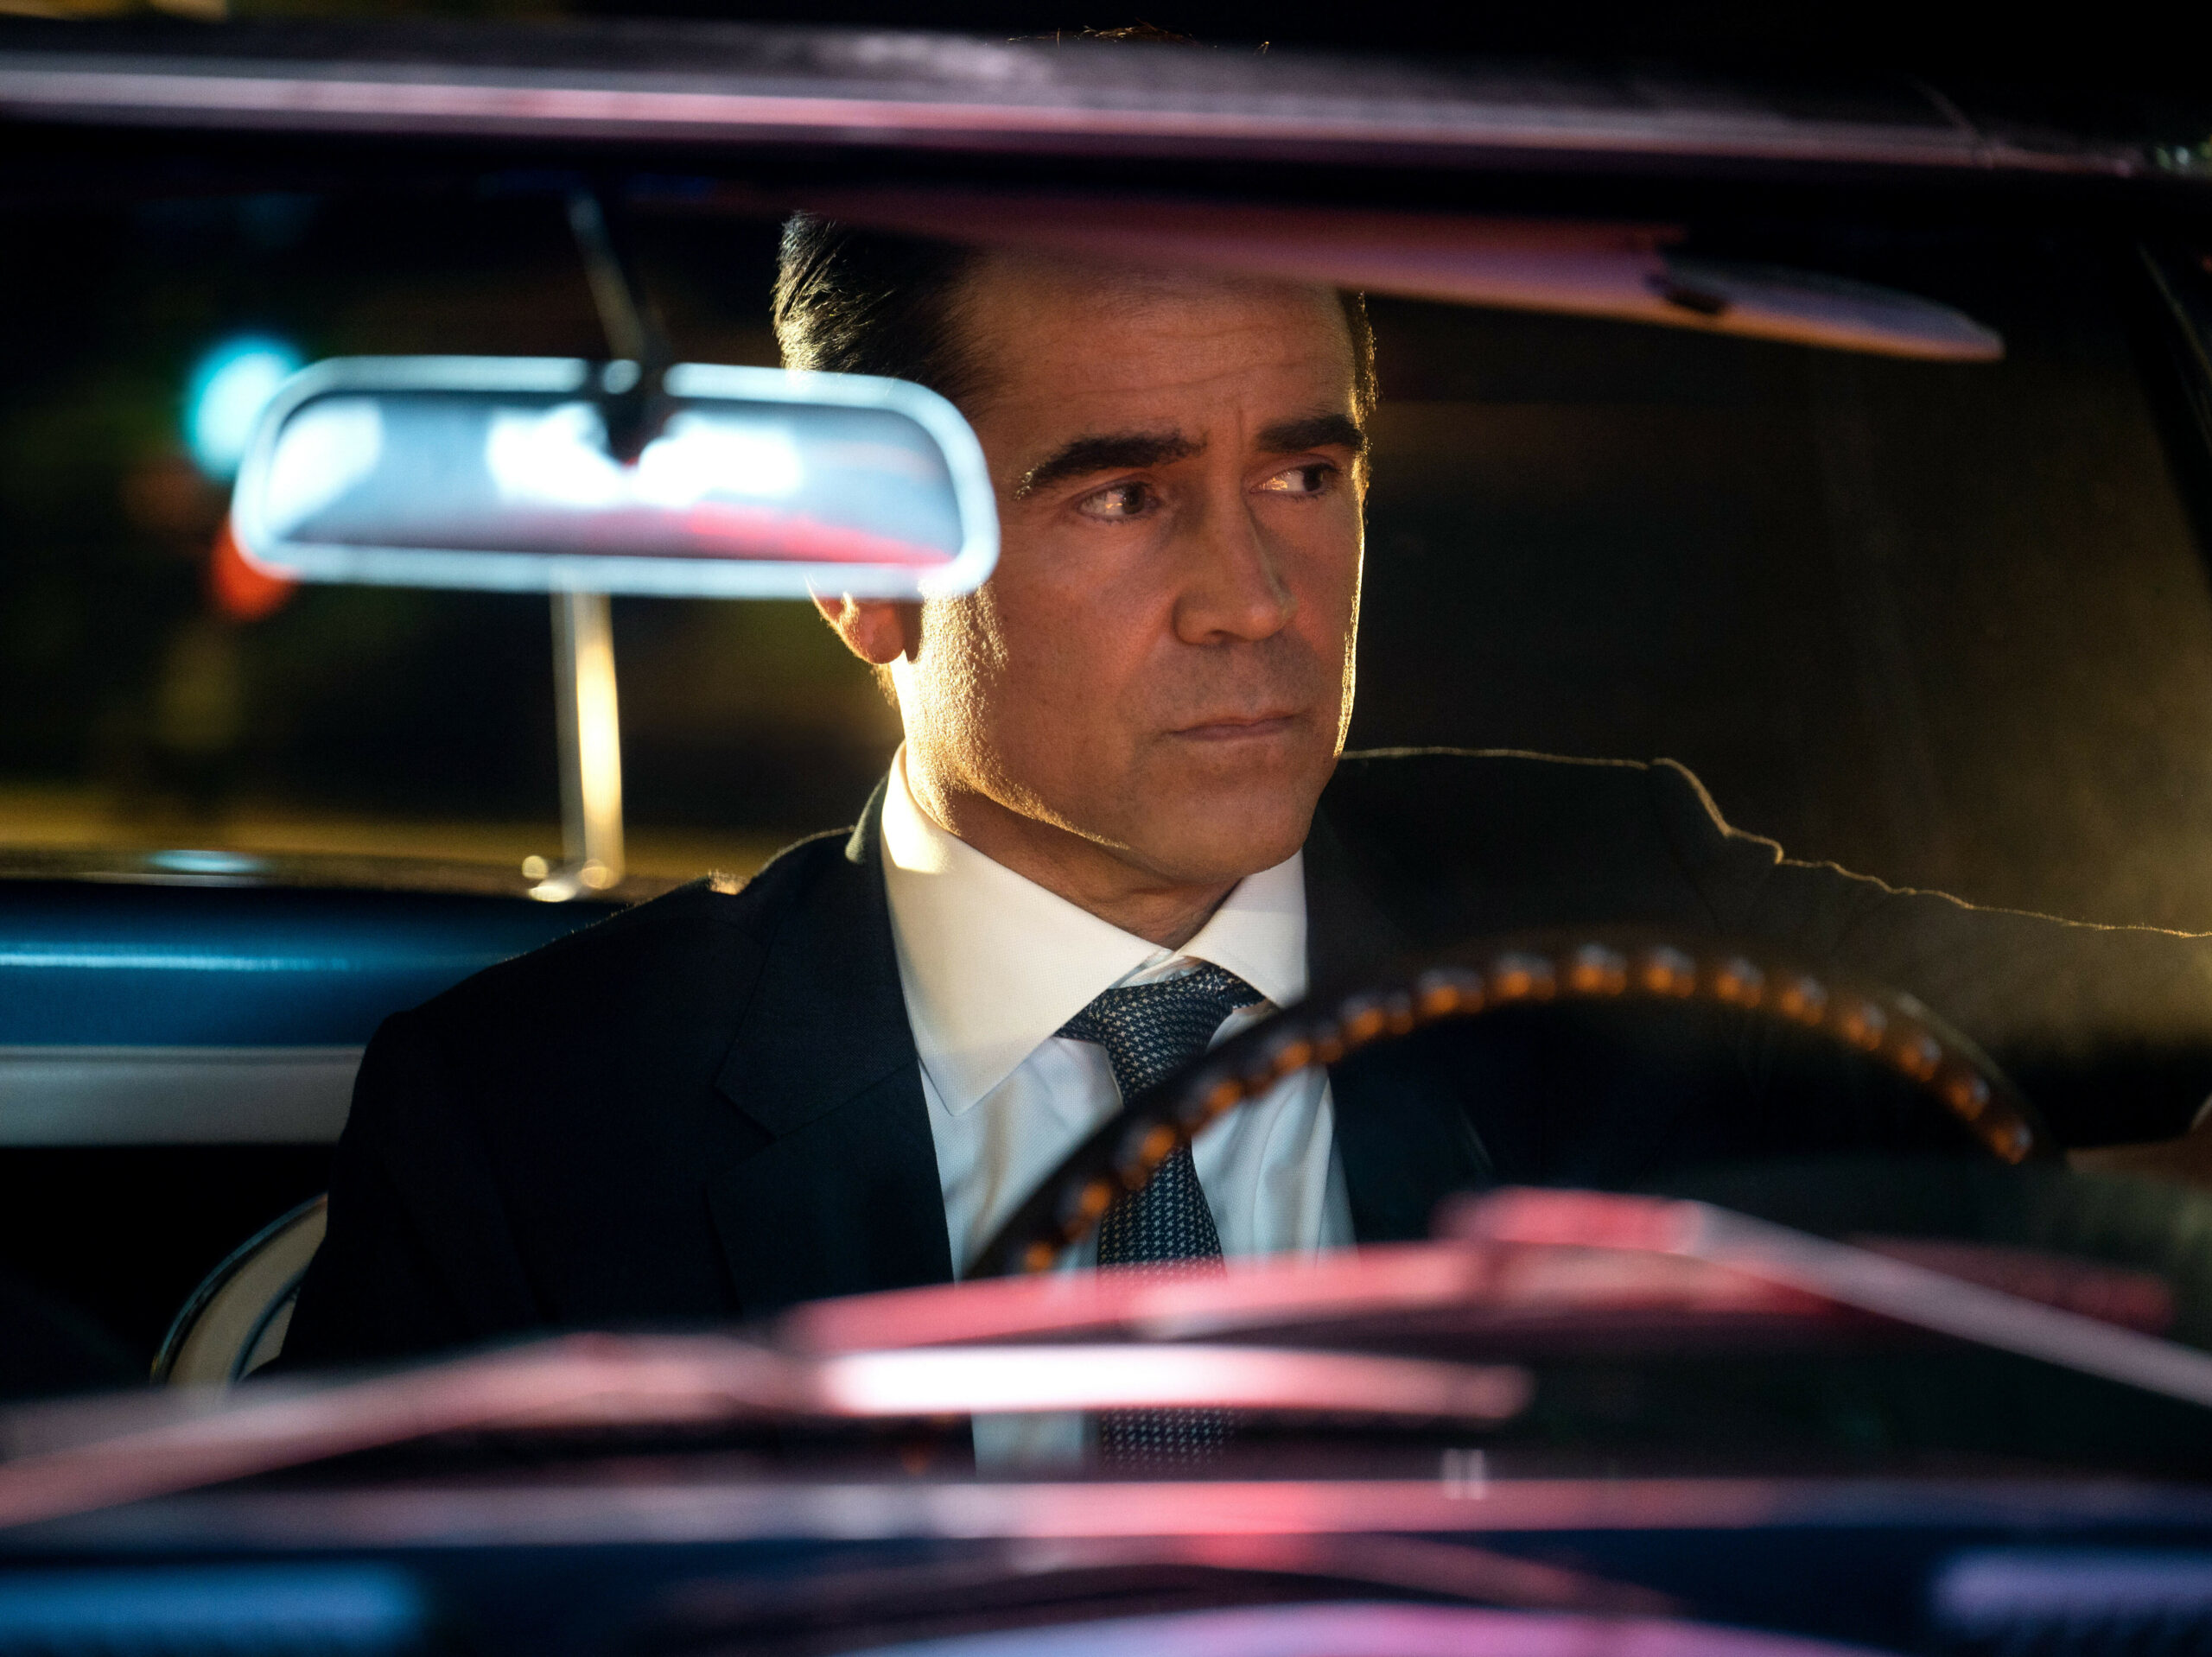 Colin Farrell patrols Los Angeles in style as private eye John Sugar in new series, Sugar.